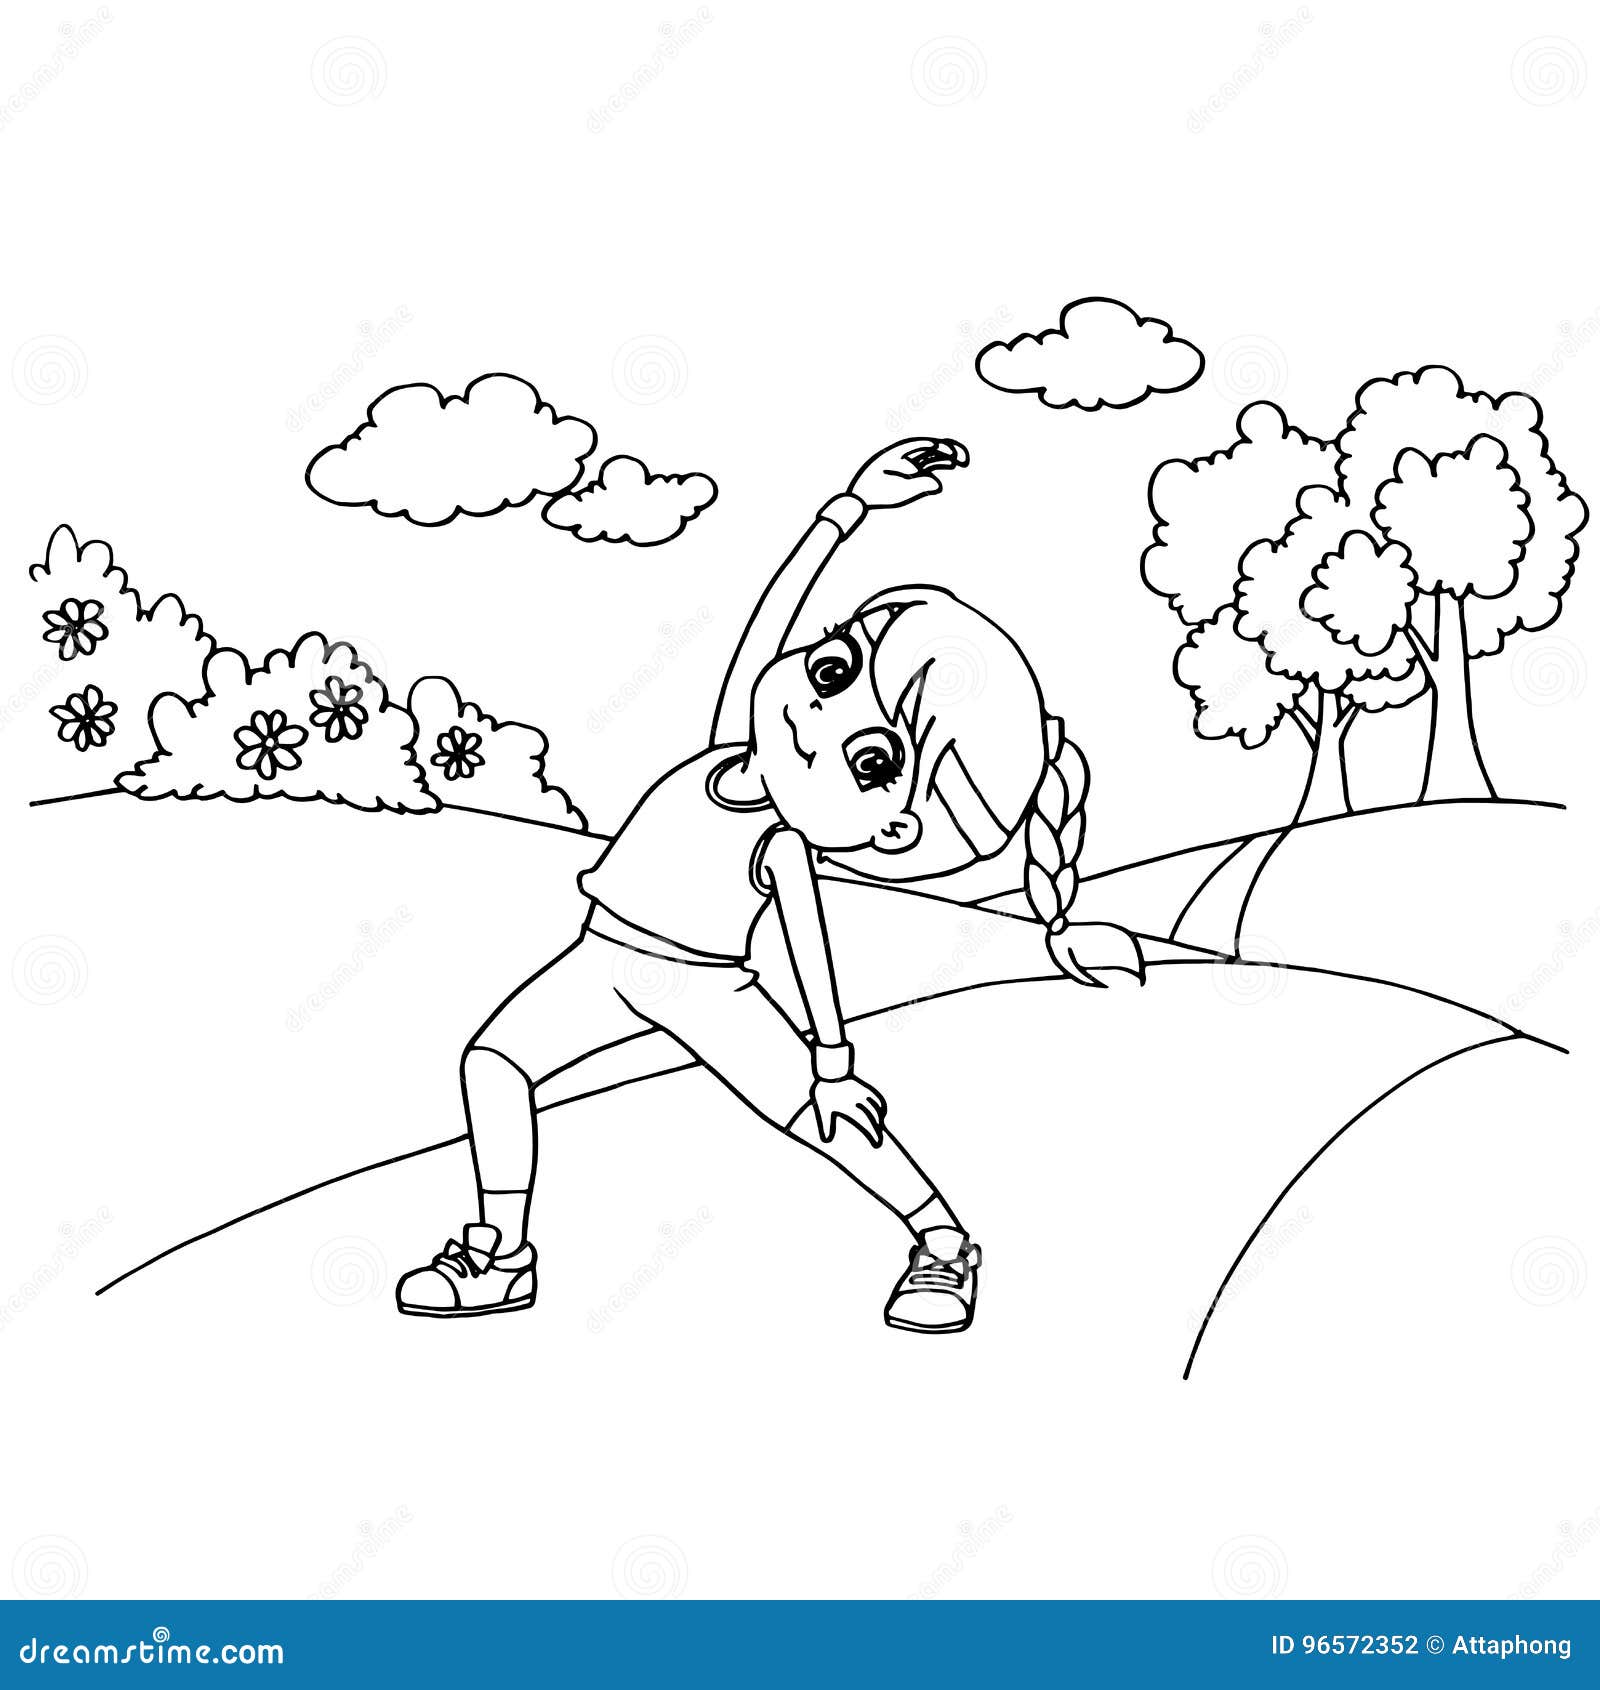 kid jumping rope cartoon coloring page 